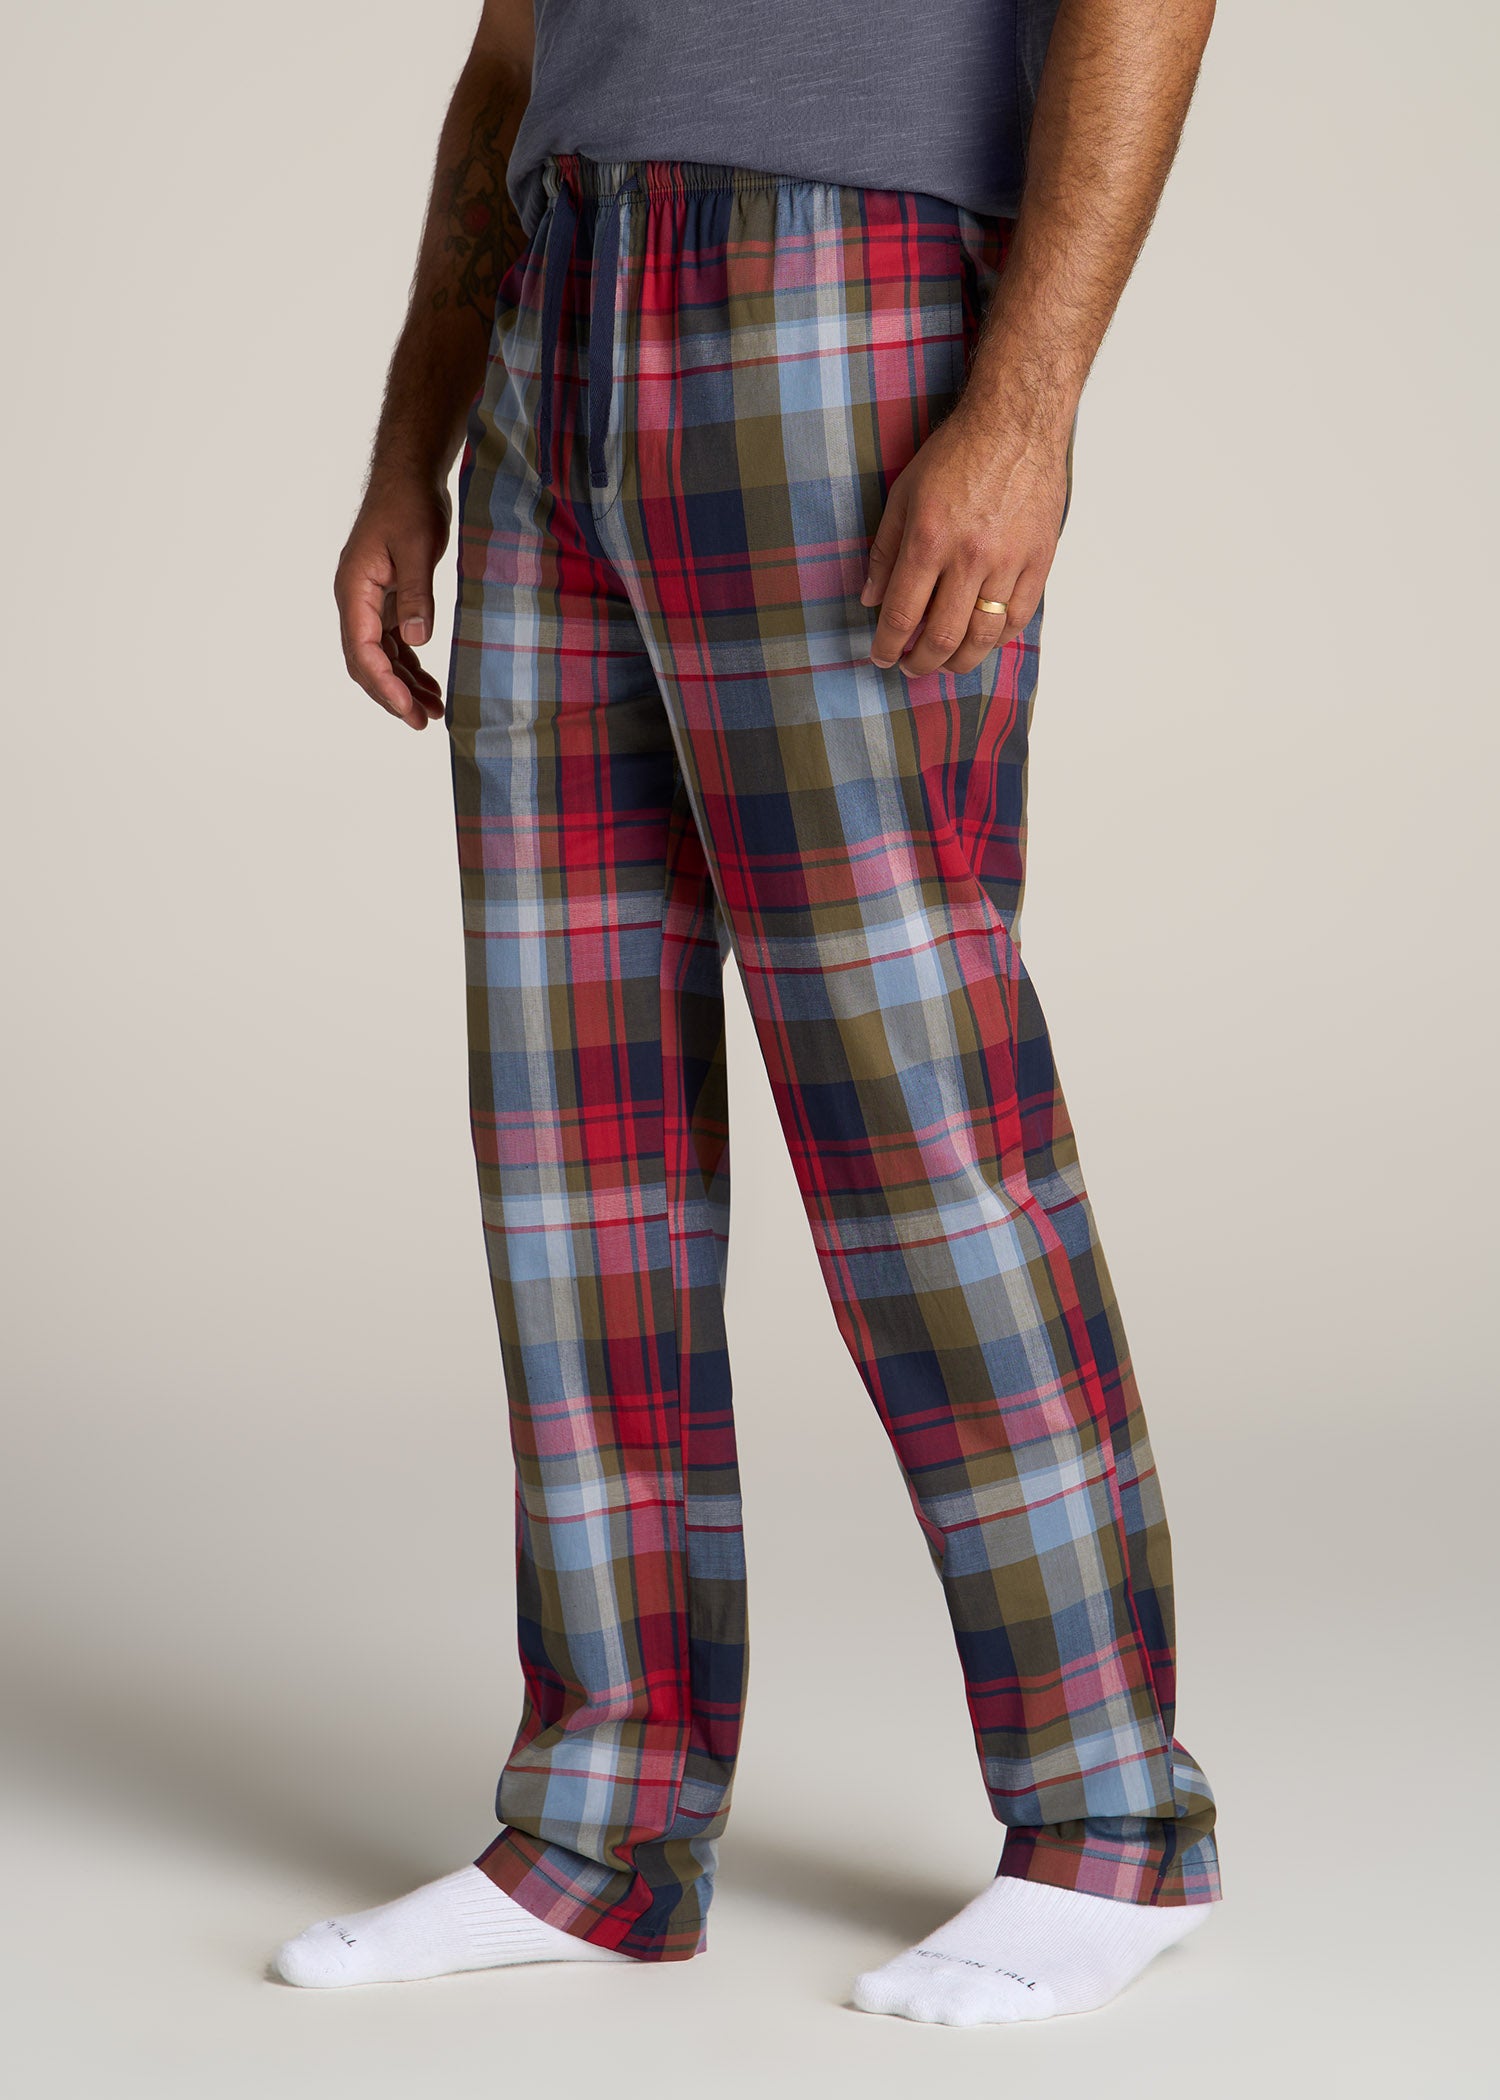 Men's Super Soft Pajama Pant Comfy Lounge Plaid Sleep Pants, M-XXL